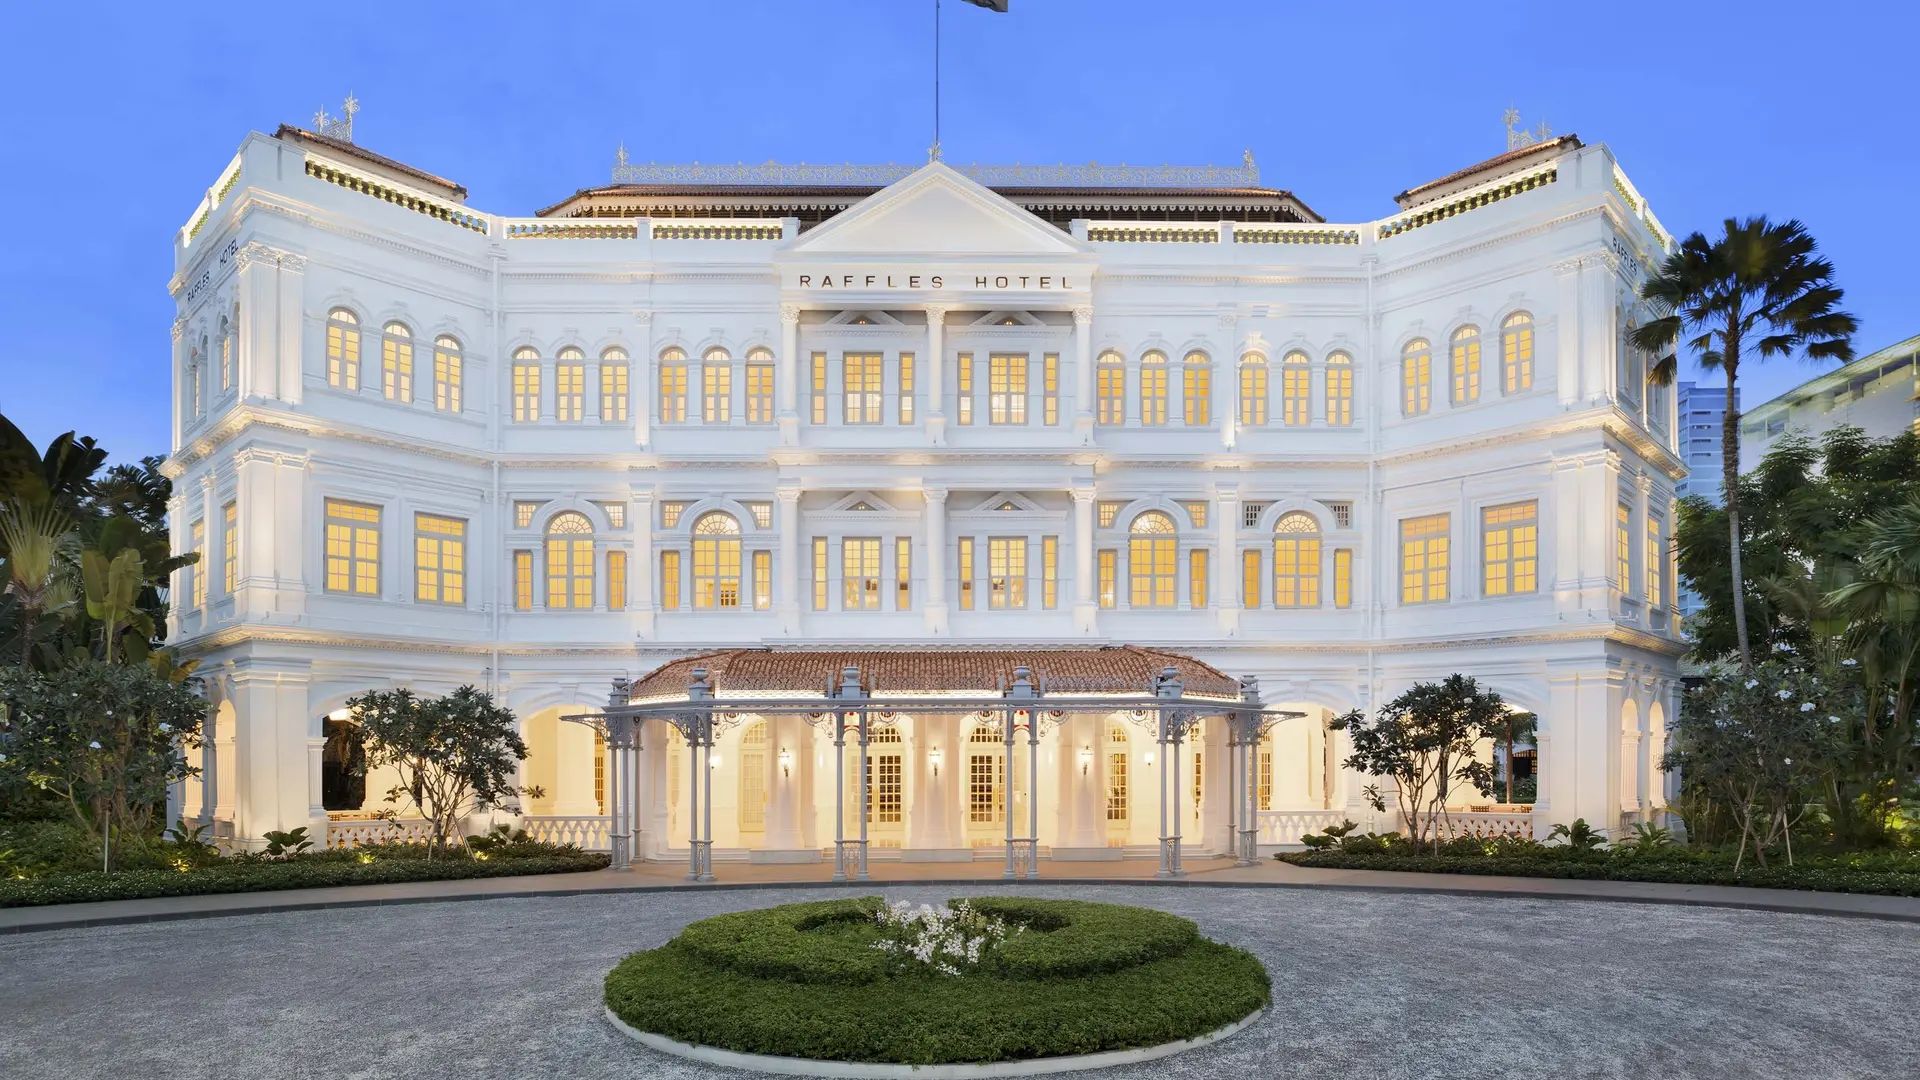 Hotels Toplists - 10 Best Luxury Hotels In Singapore